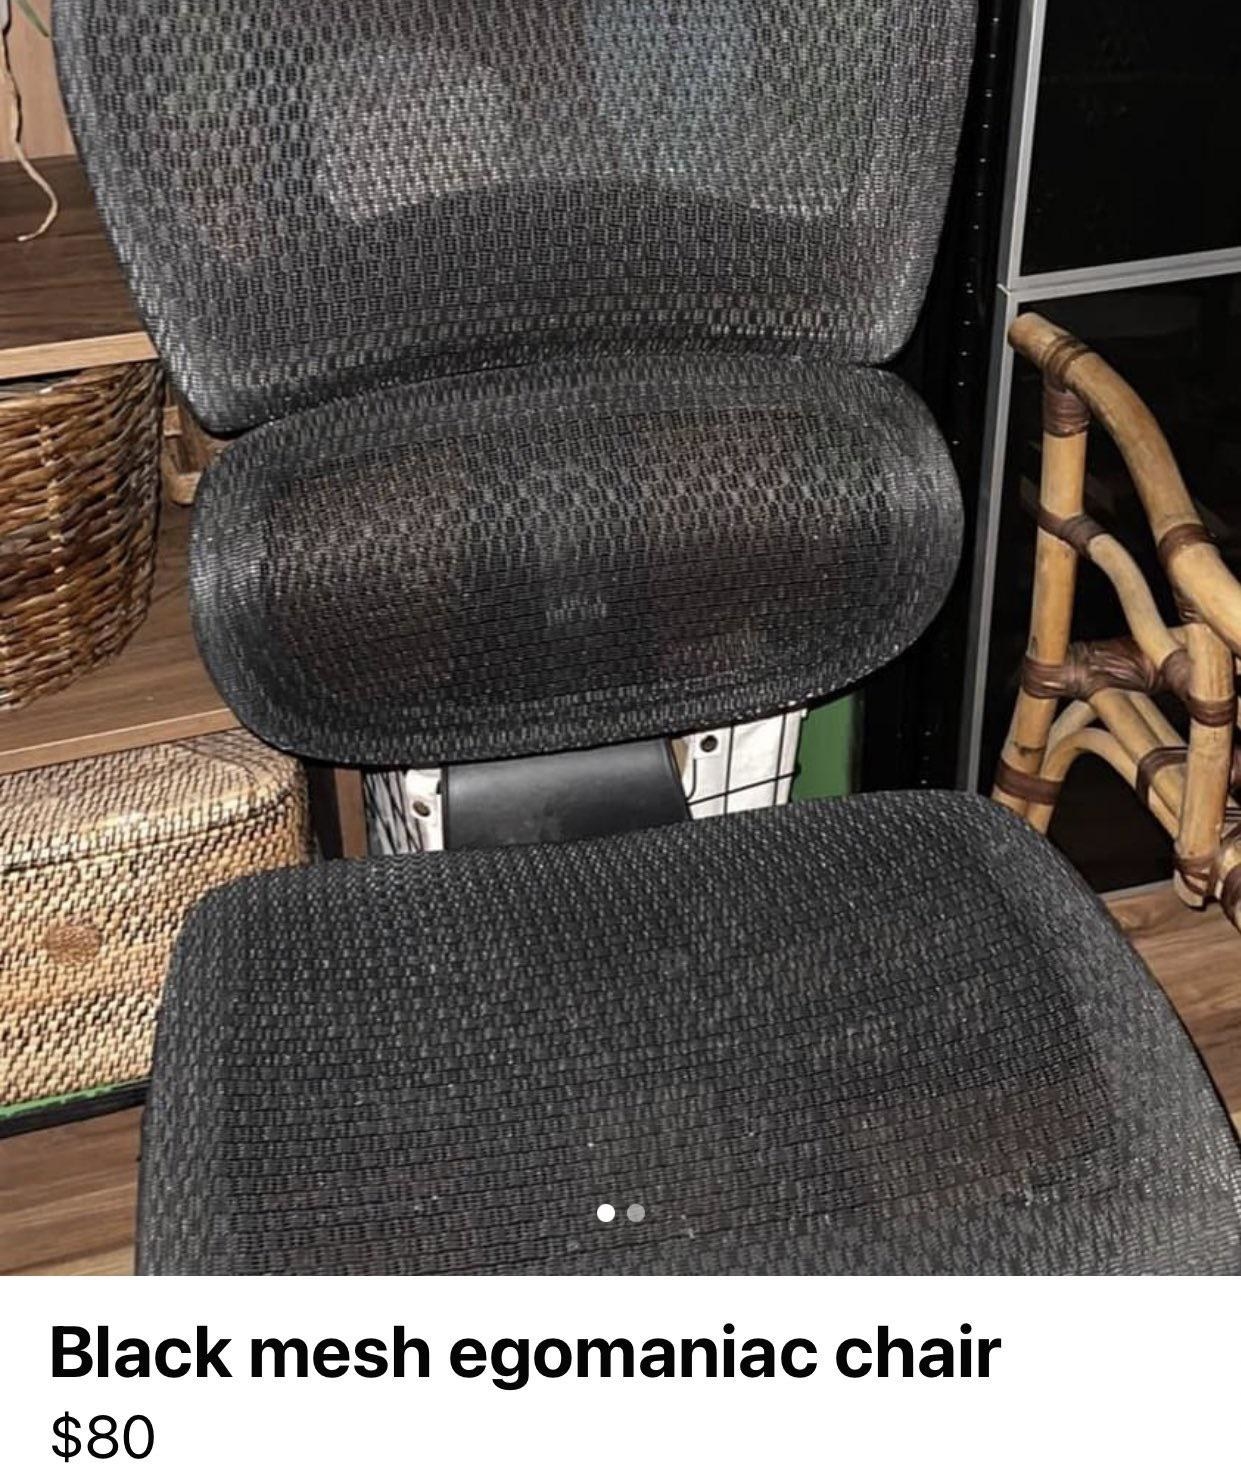 marketplace ad reading black mesh egomaniac chair